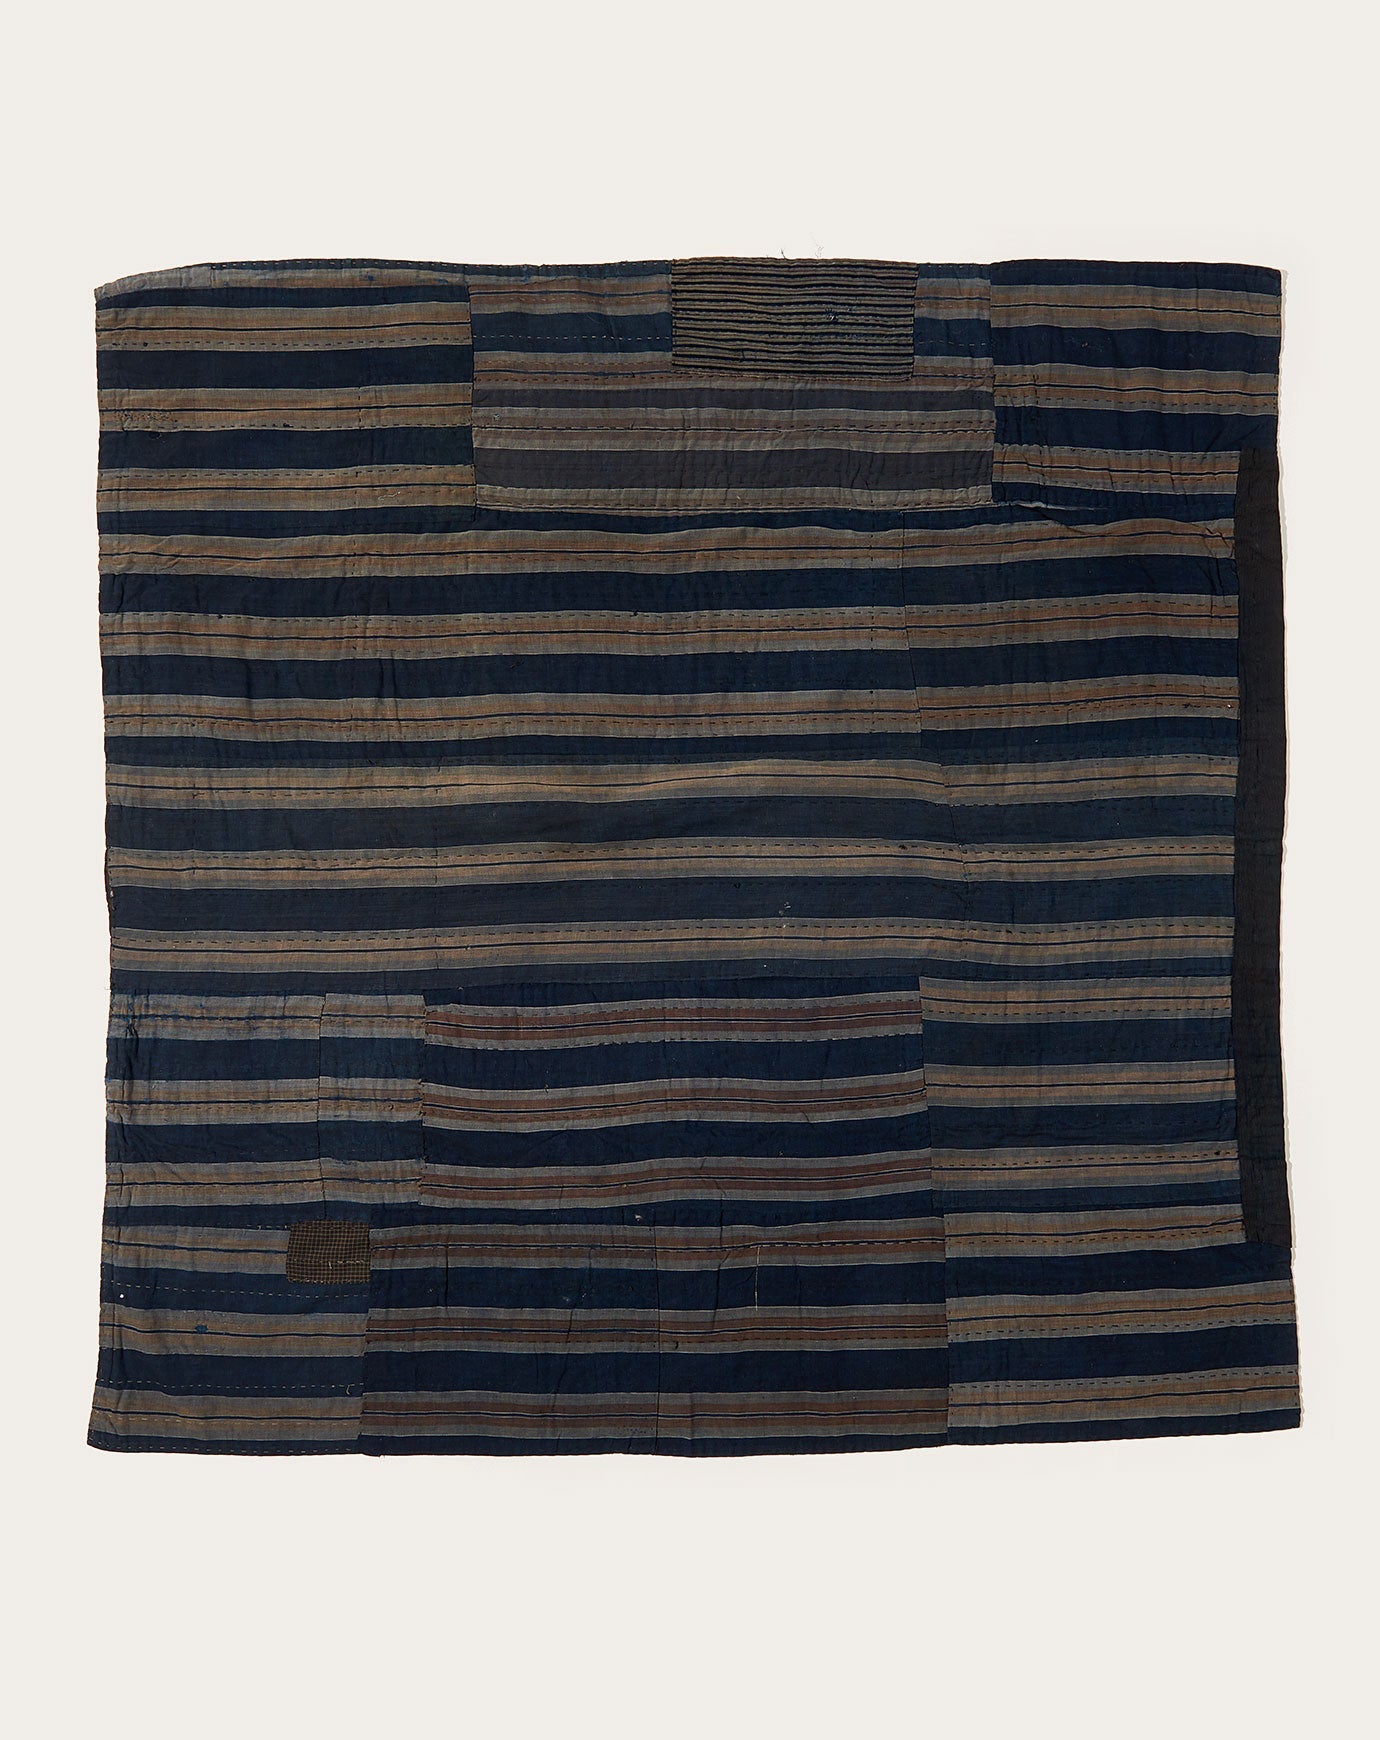 Vintage Japanese Patch Quilt No. 6